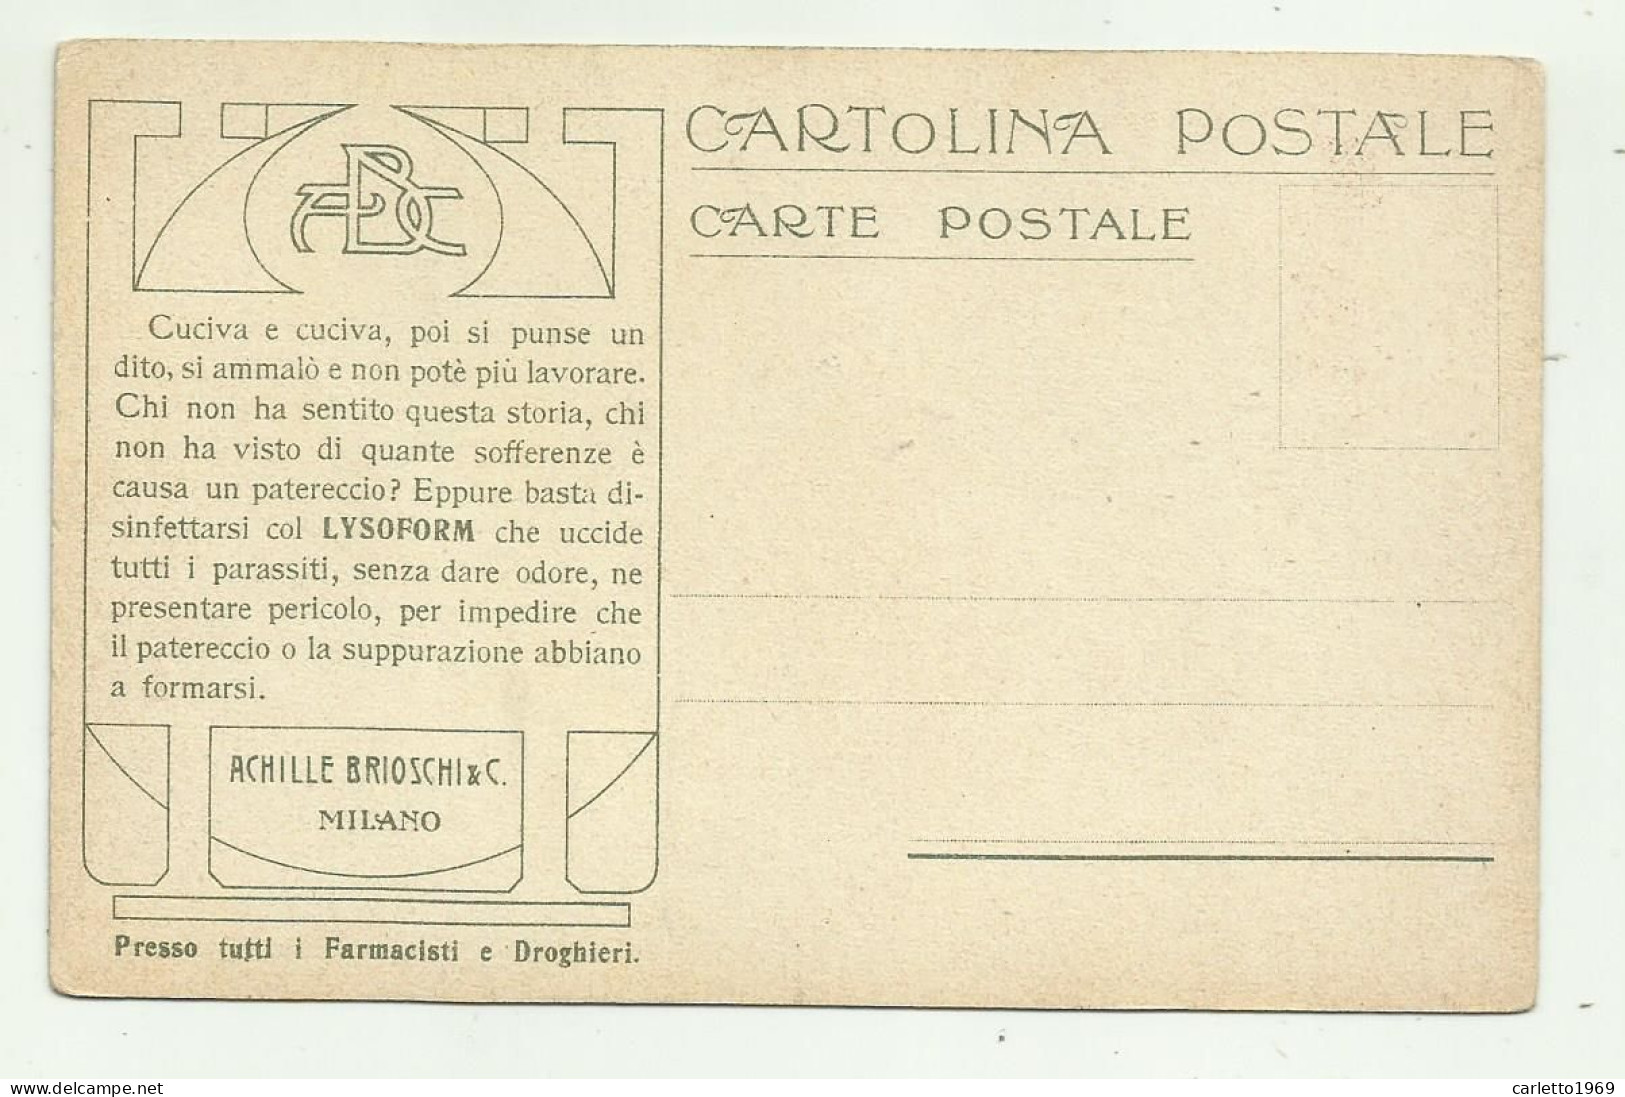 8 CARTOLINE LA POSTA IN - RETRO PUBBLICITA' ACHILLE BRIOSCHI & C. MILANO  - NV  FP - Poste & Postini